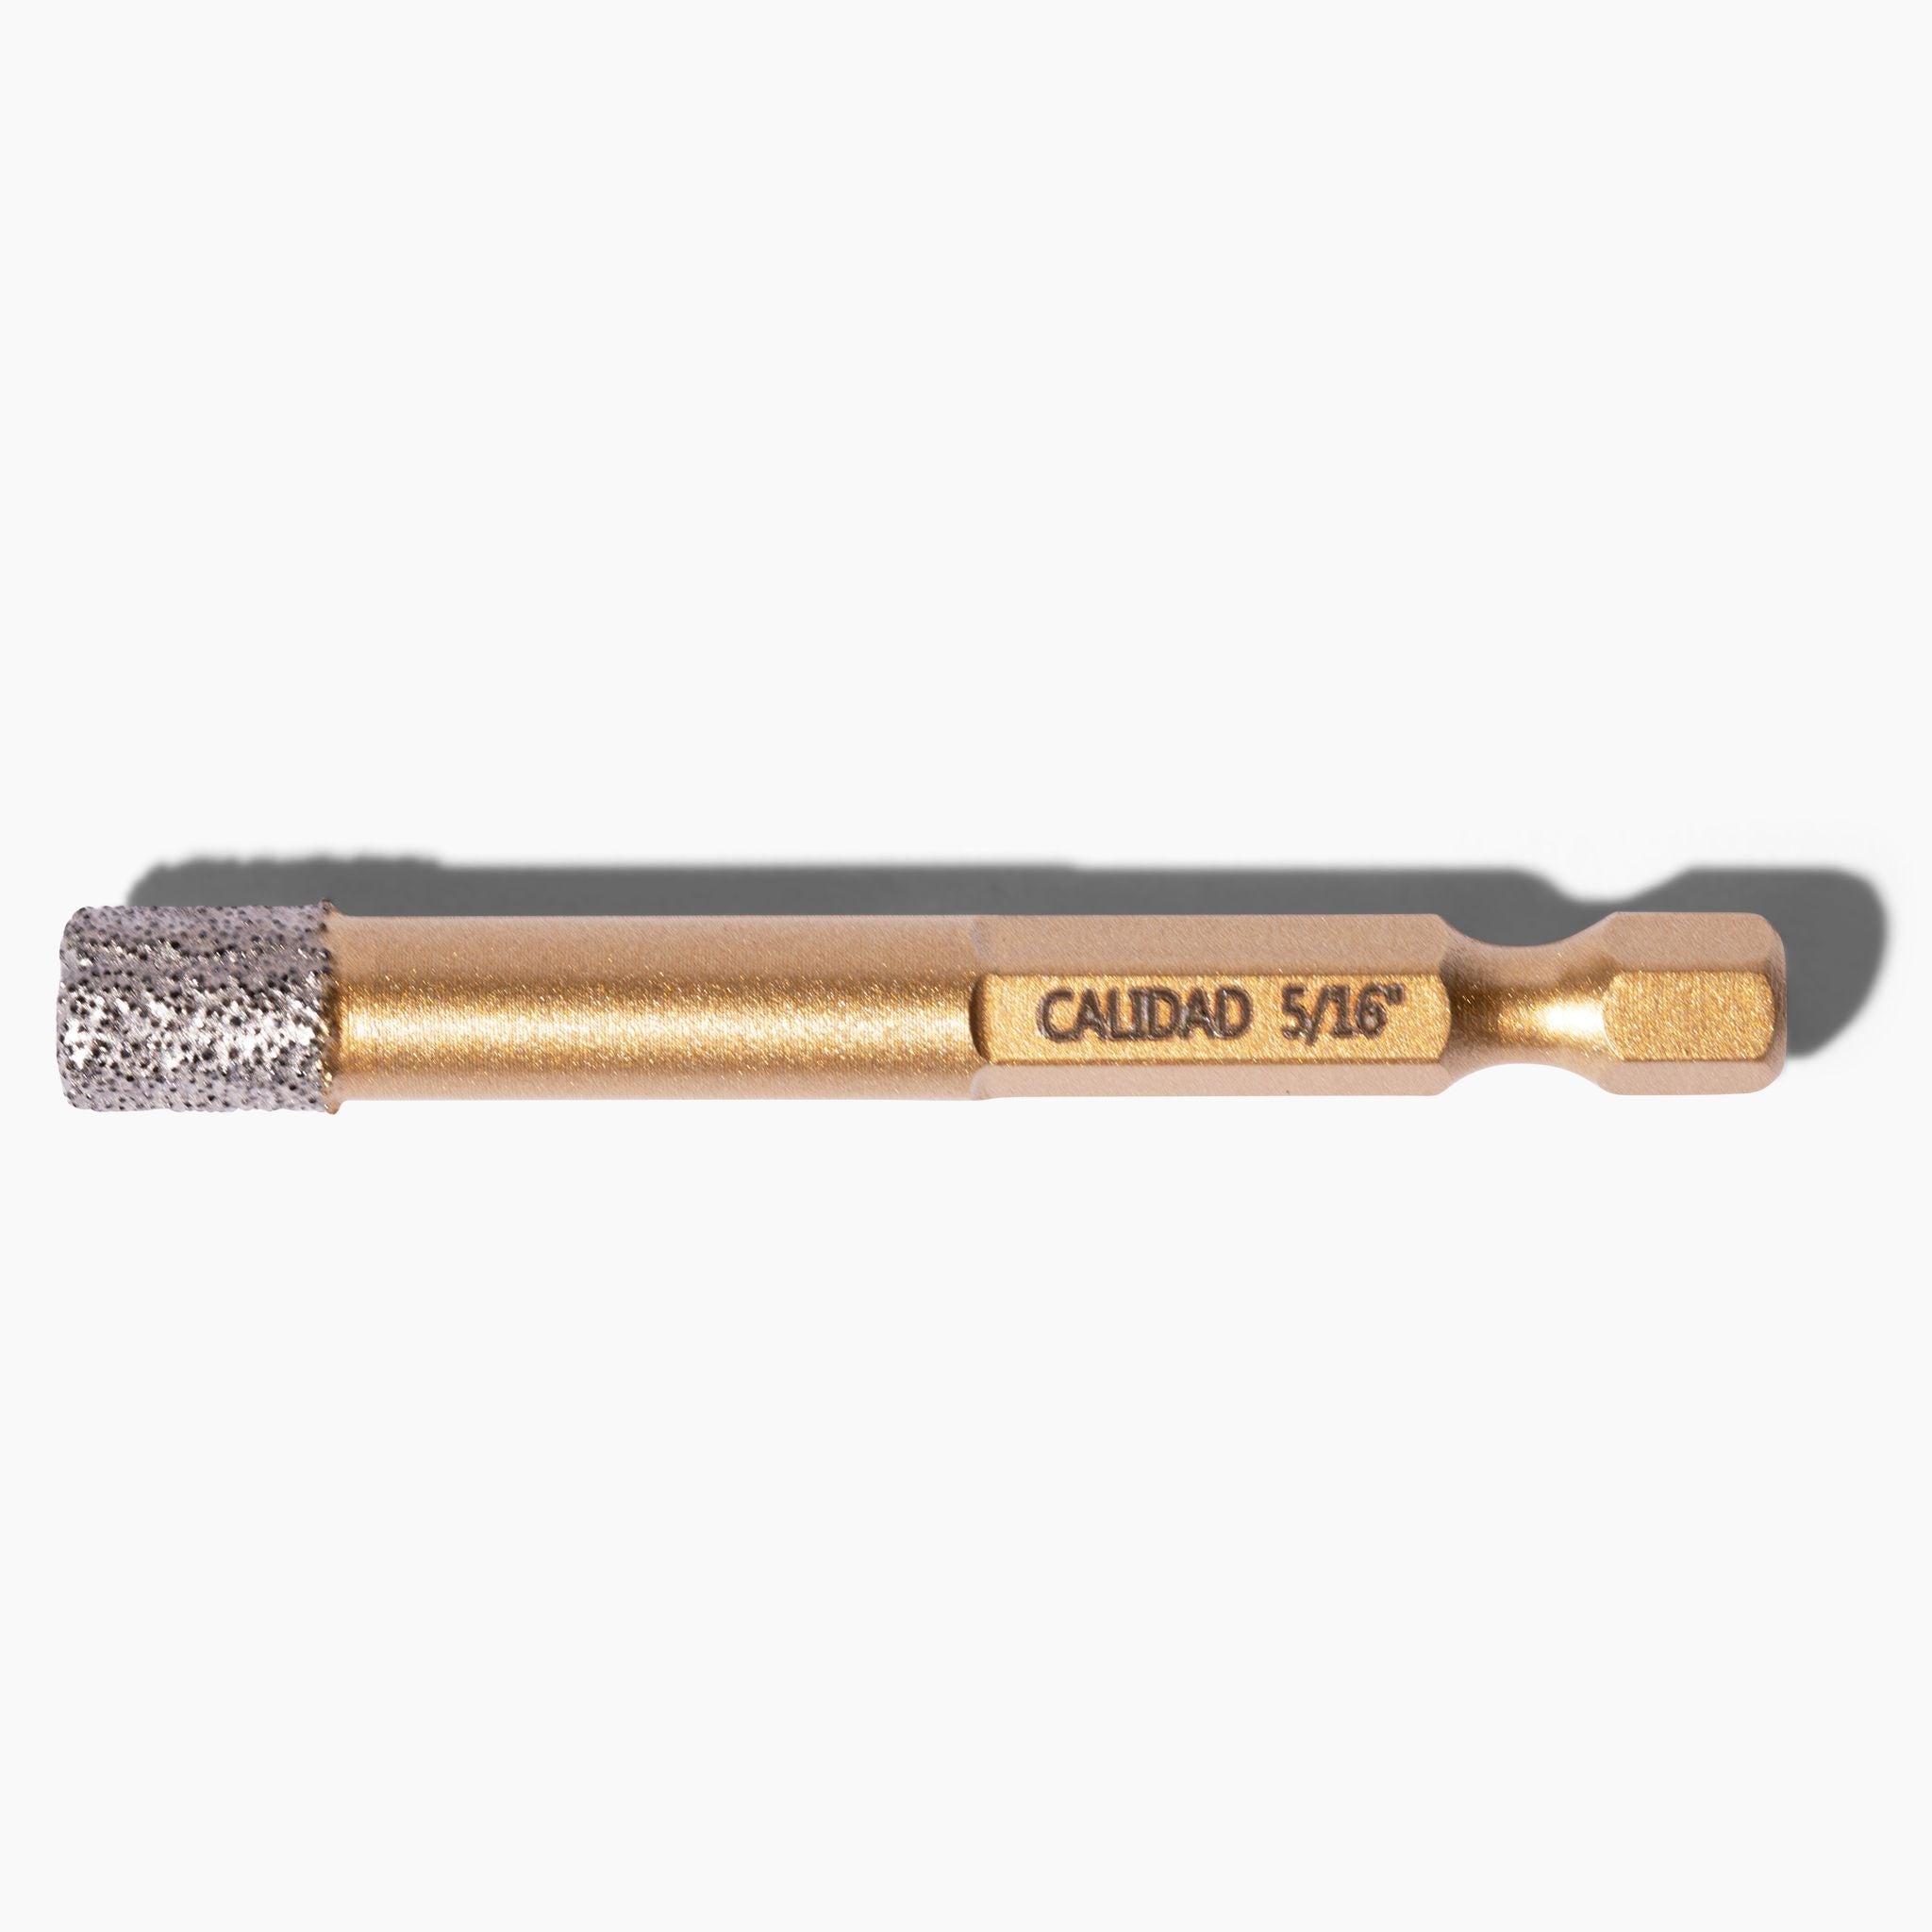 Calidad 8mm (5/16") Diamond Core Drill Bit "Needle D's 3.0"